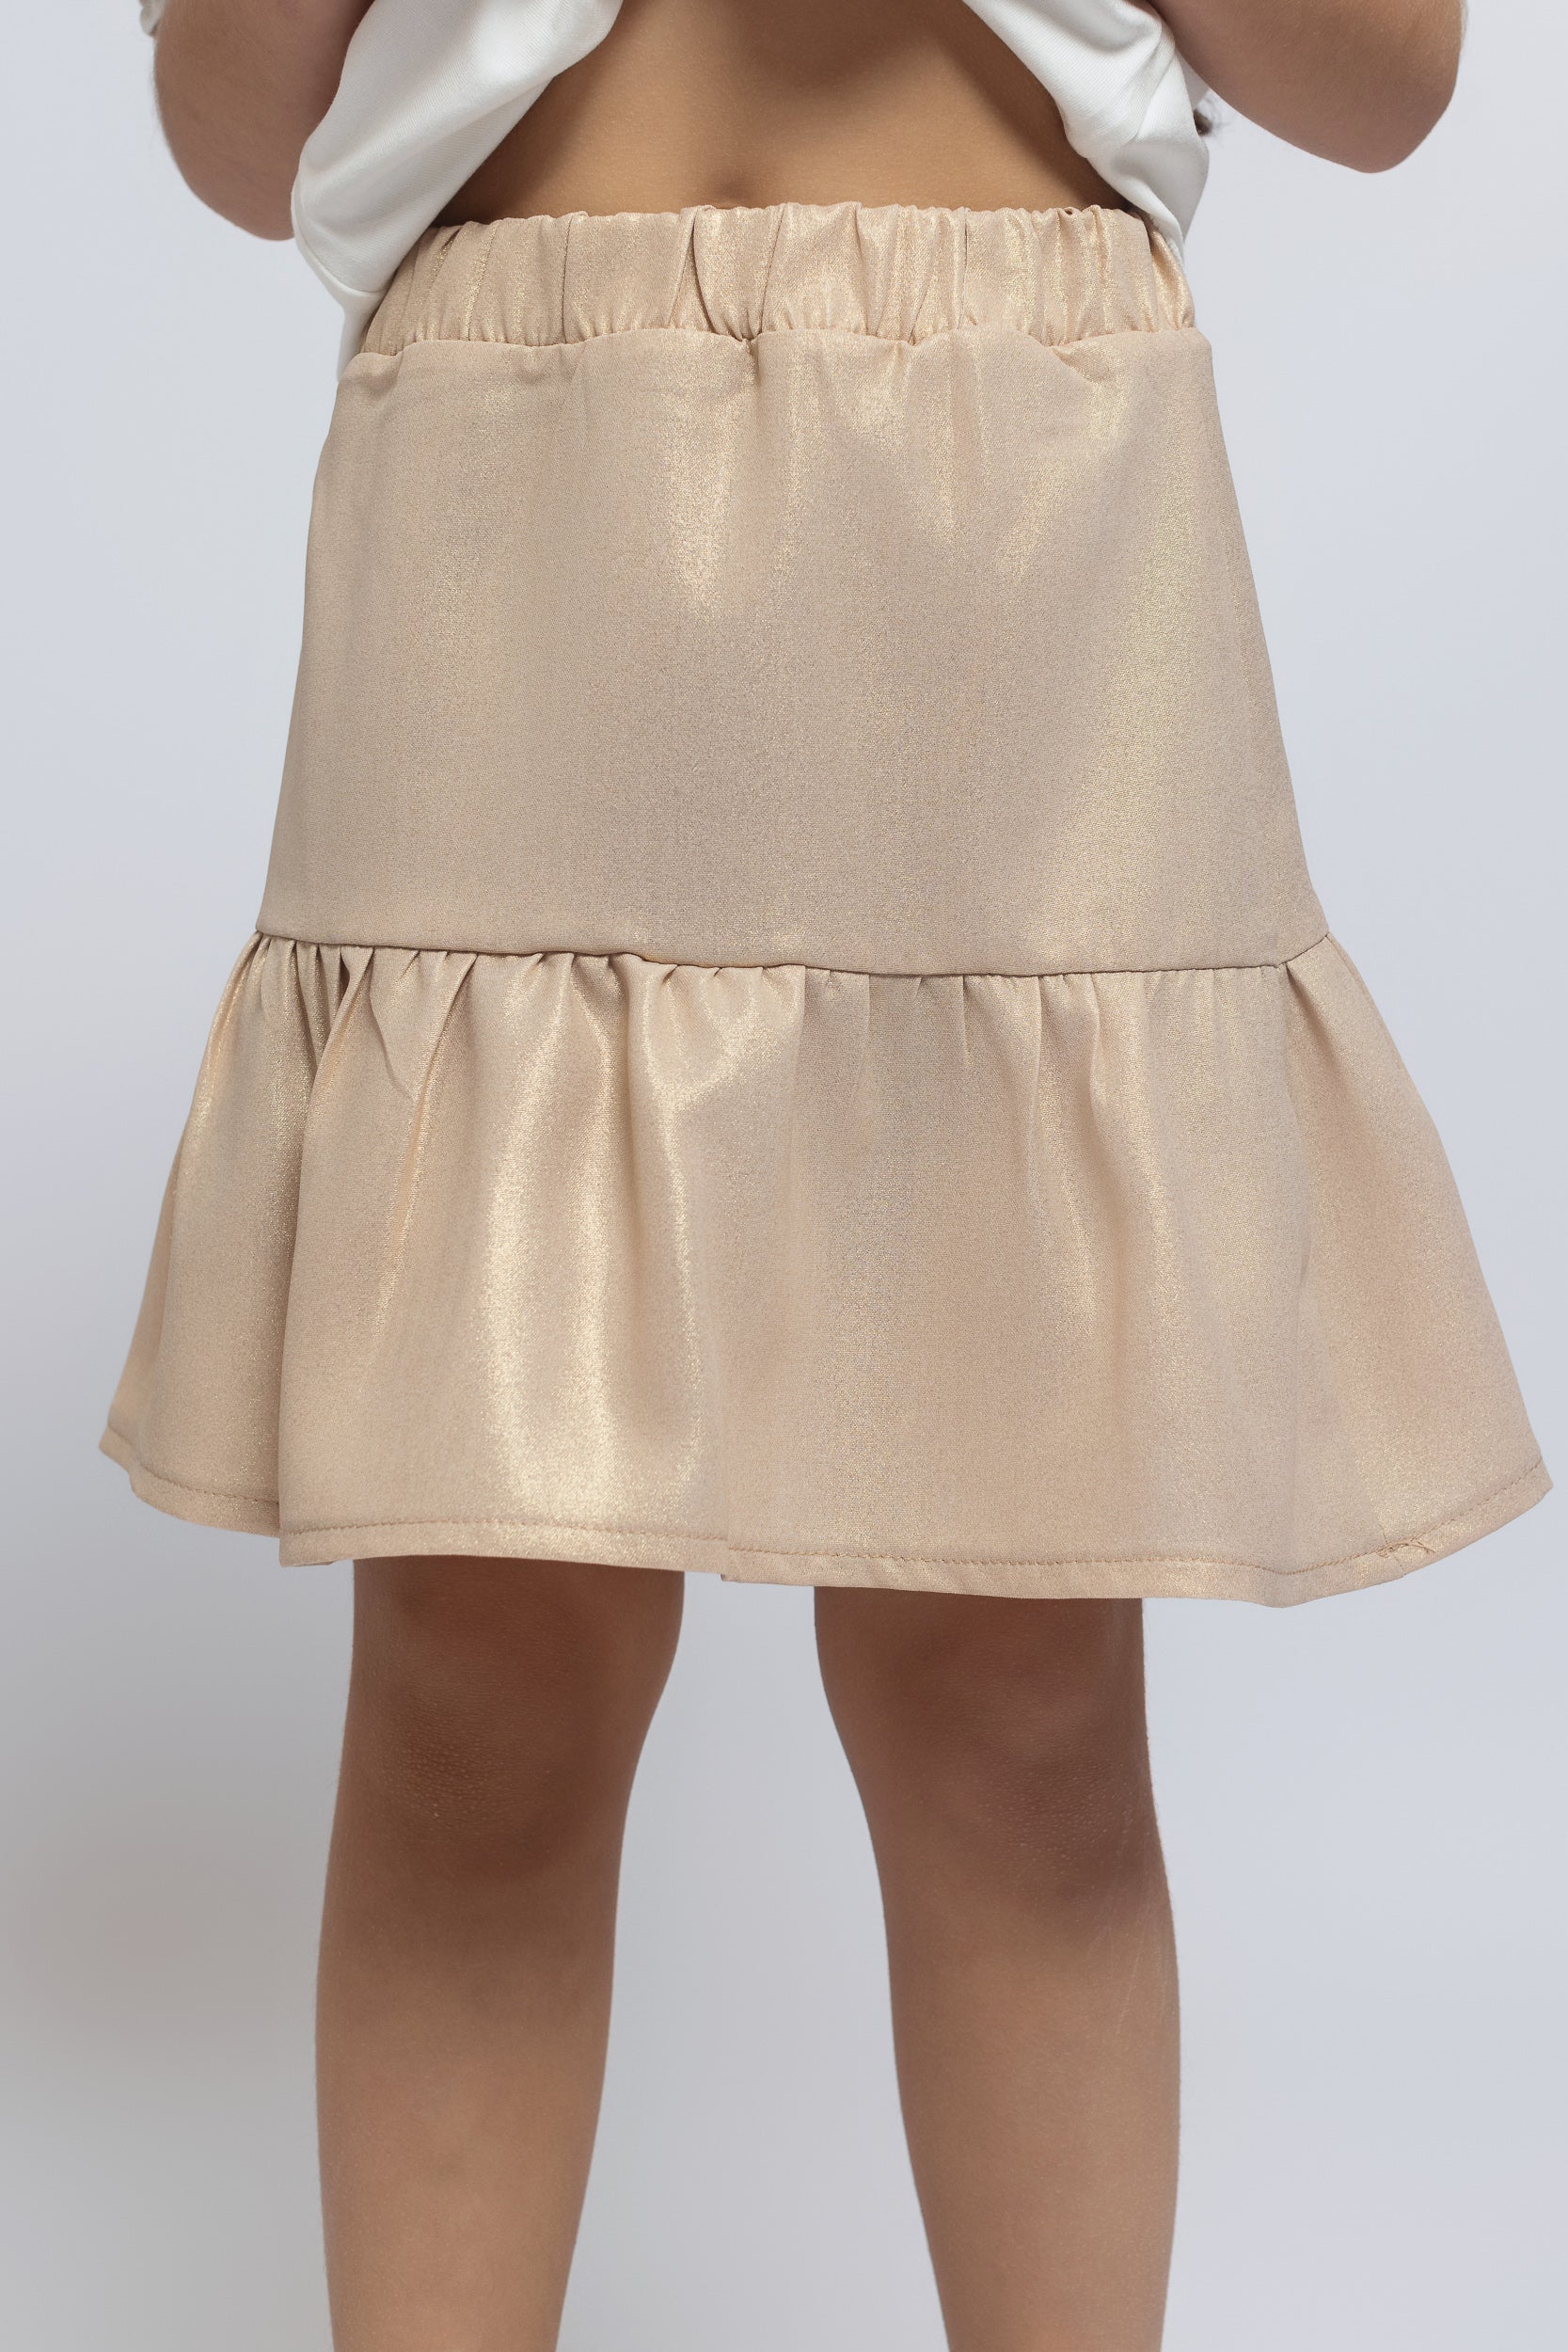 Shiny Layered Skirt For Girls - Gold